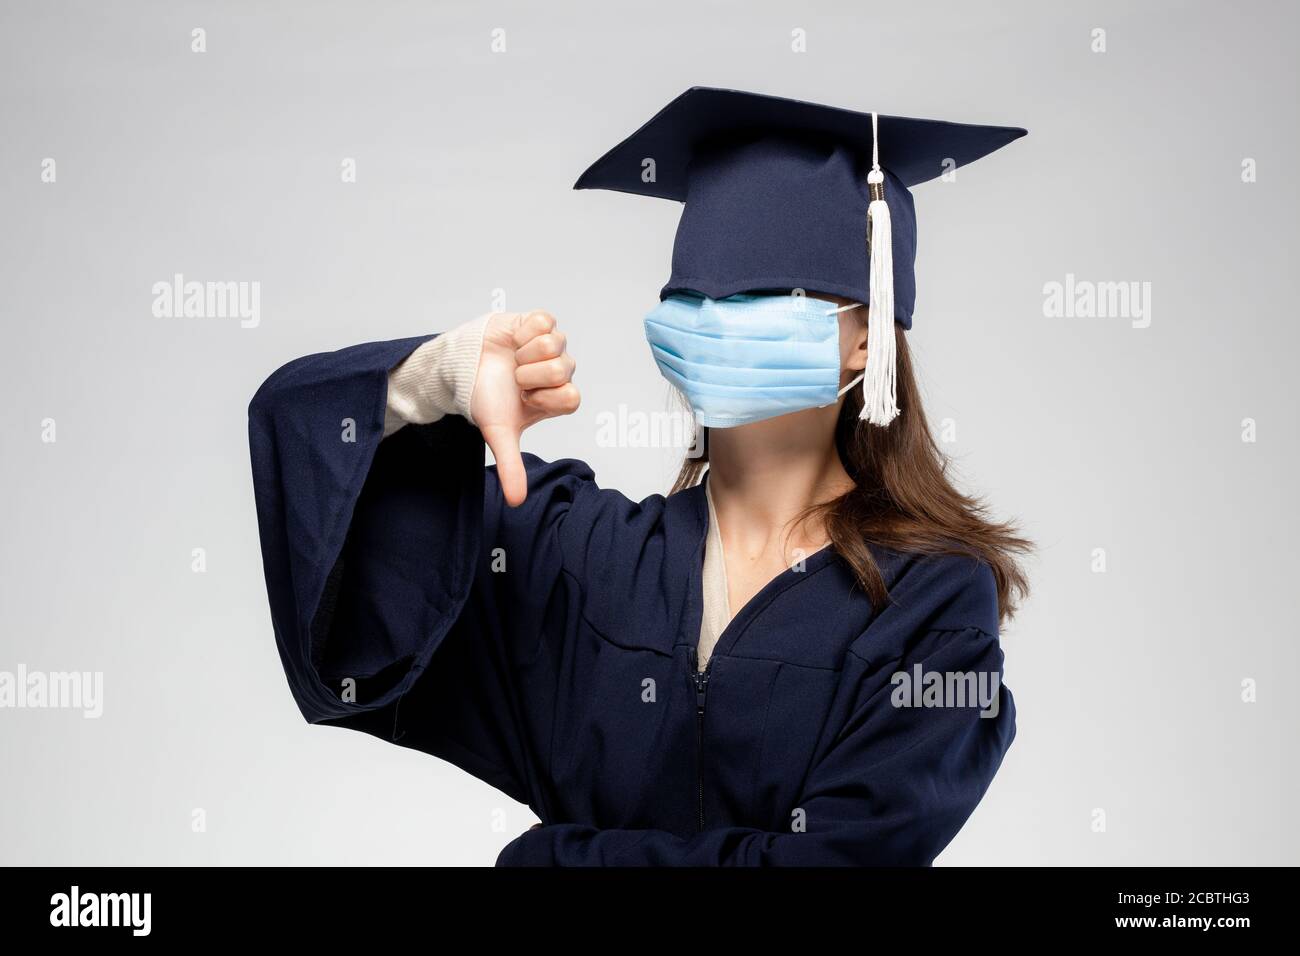 Retrato de niña de graduación, máscara médica de vista. Un aprobado. Auto aislamiento, cuarentena, concepto de graduación virtual Foto de stock